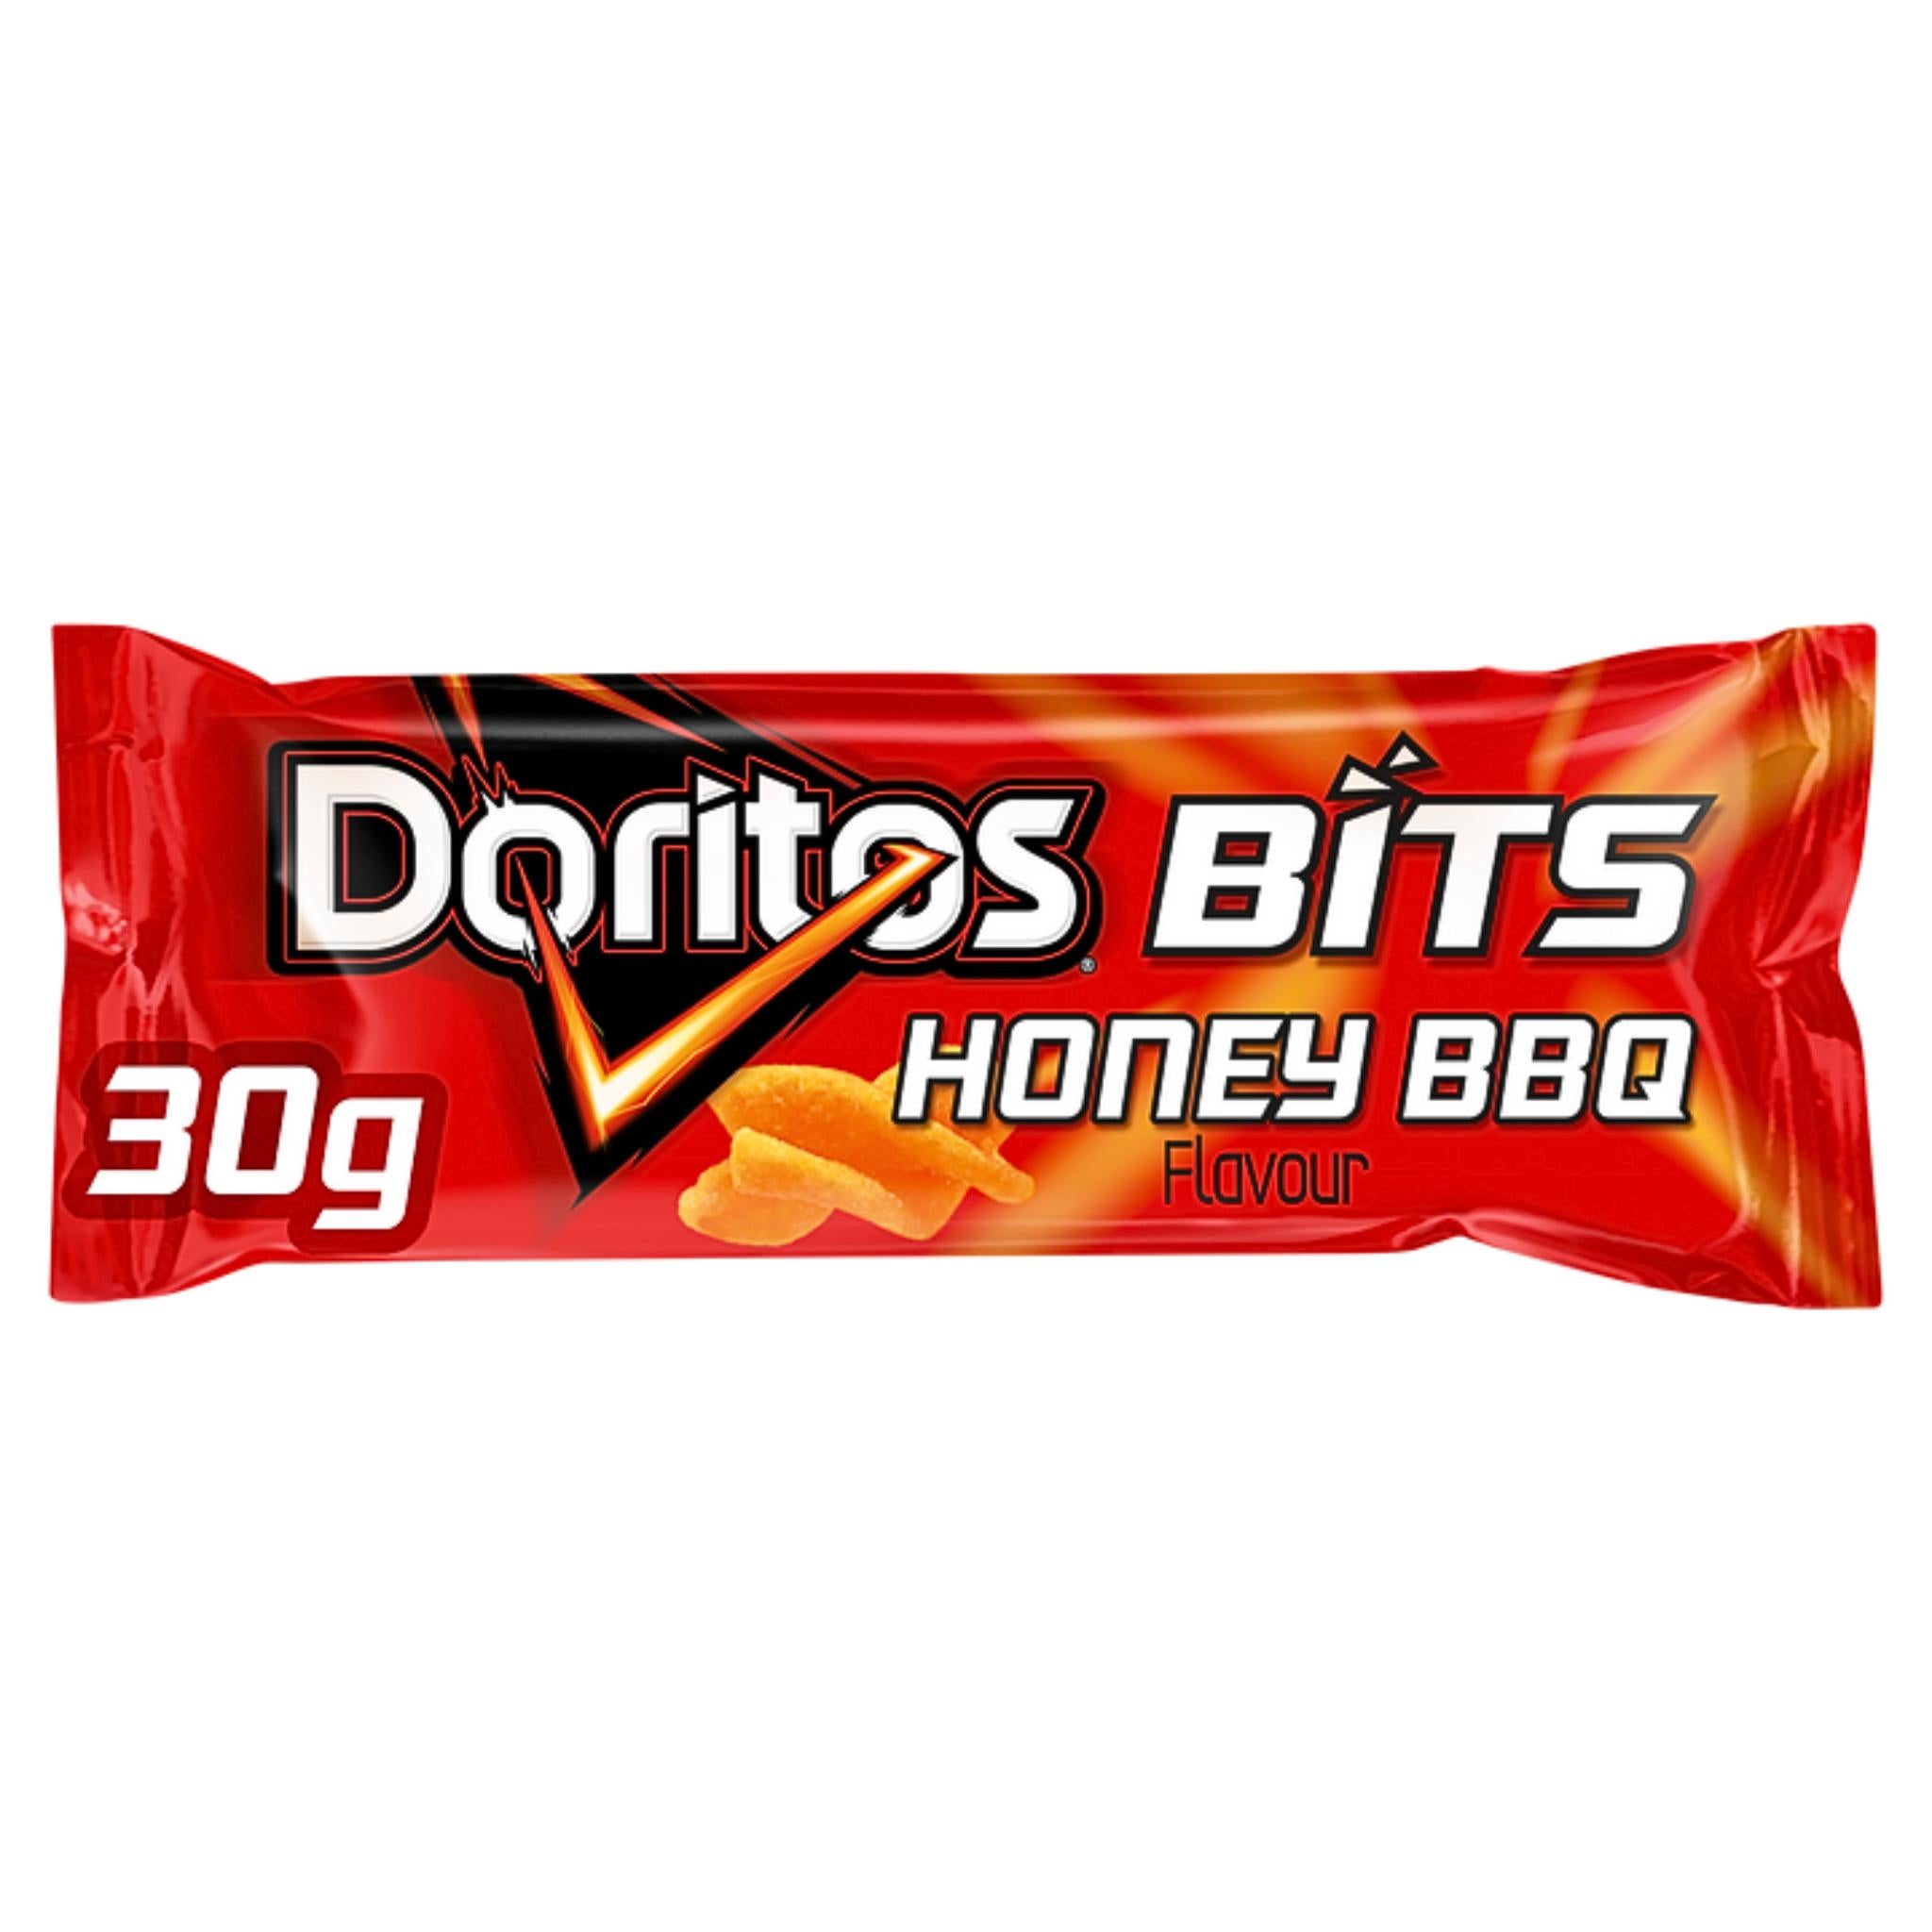 Doritos Bits Honey BBQ - 30g (THT: 26-11-23)